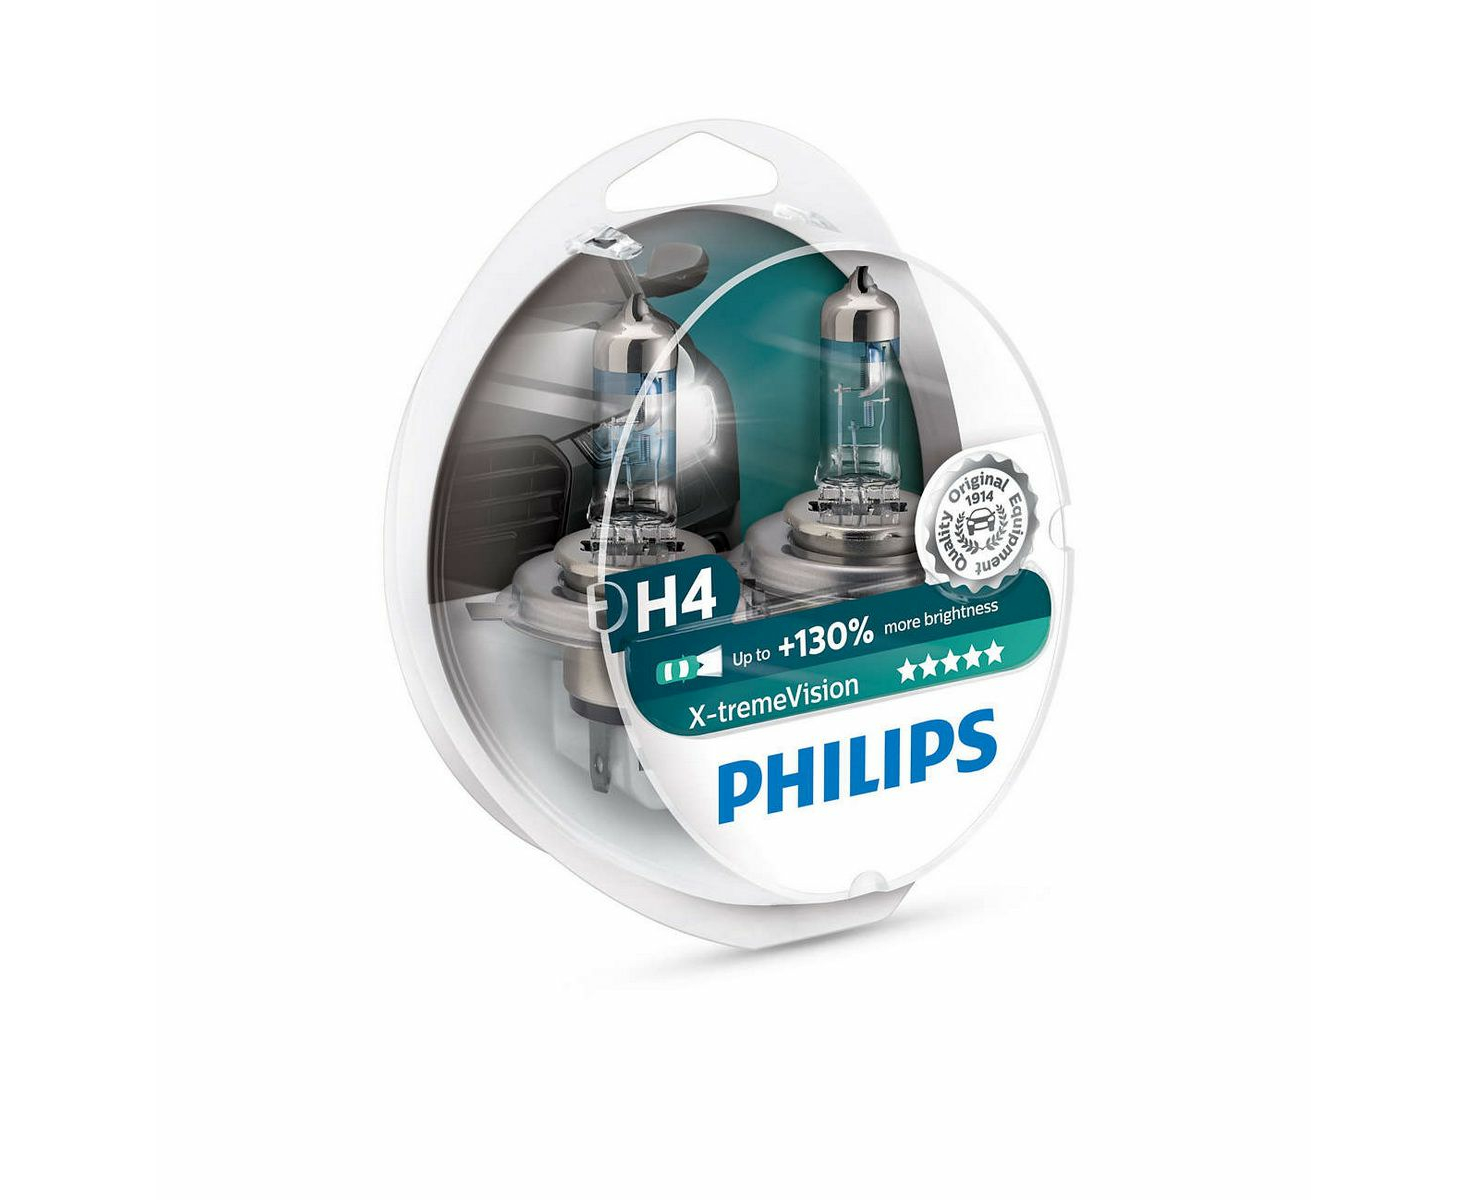 Лампа филипс н7. Philips 12342xv+ s2. Лампы н7 Филипс экстрим Вижн. Philips x-TREMEVISION h7. Филипс h7 +130.